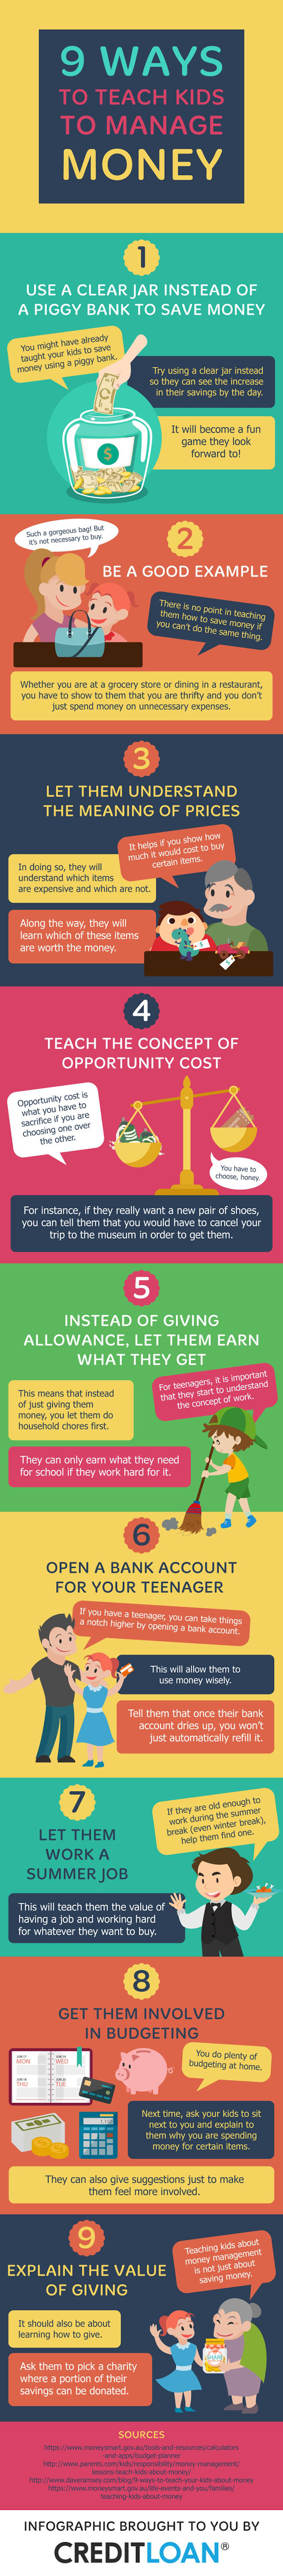 9 ways to teach kids to manage money [infographic]